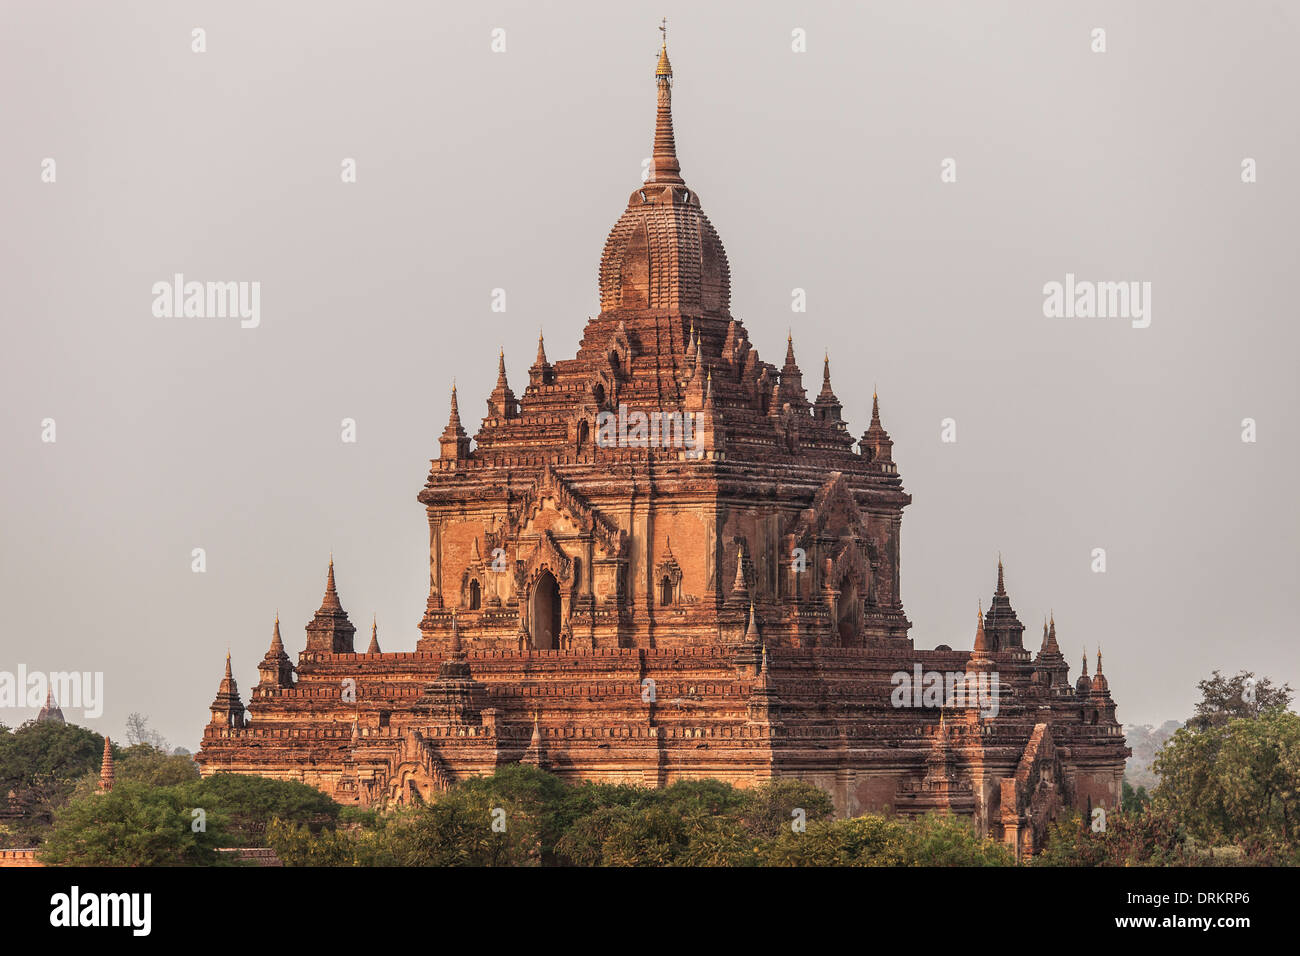 Htilominlo Pahto tempio buddista di Bagan, Myanmar Foto Stock